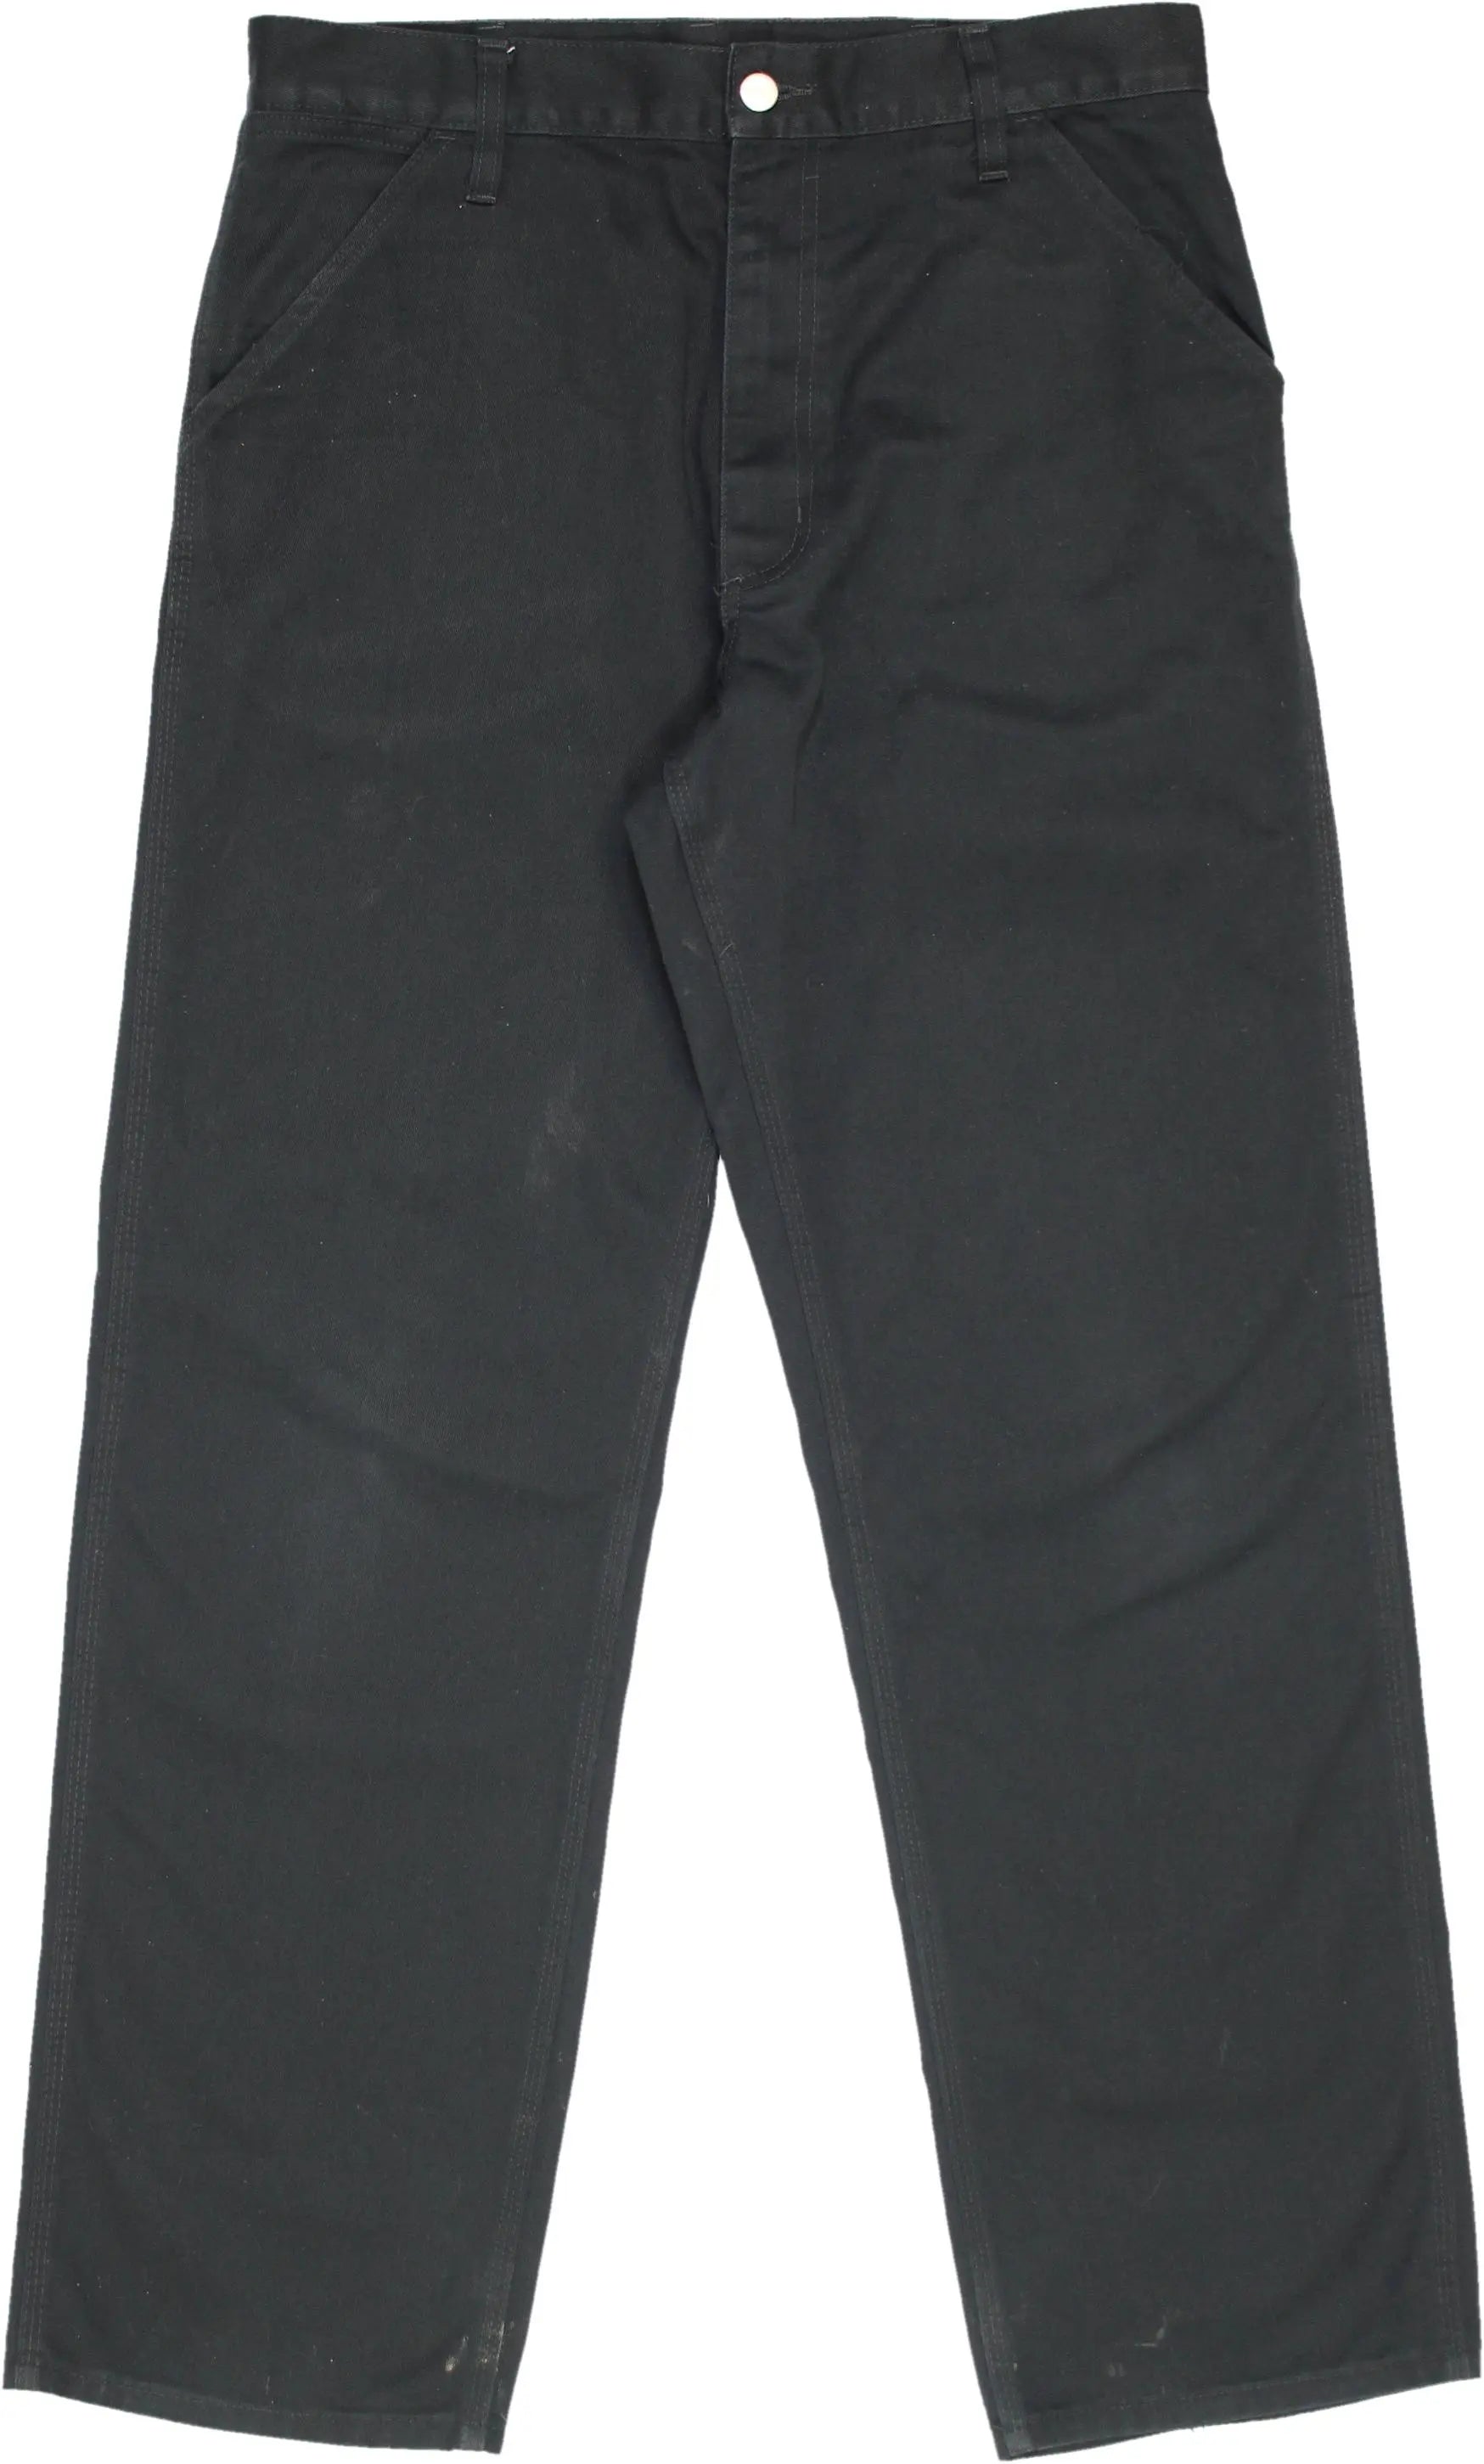 Carhartt - Carhartt Regular Black Pants- ThriftTale.com - Vintage and second handclothing